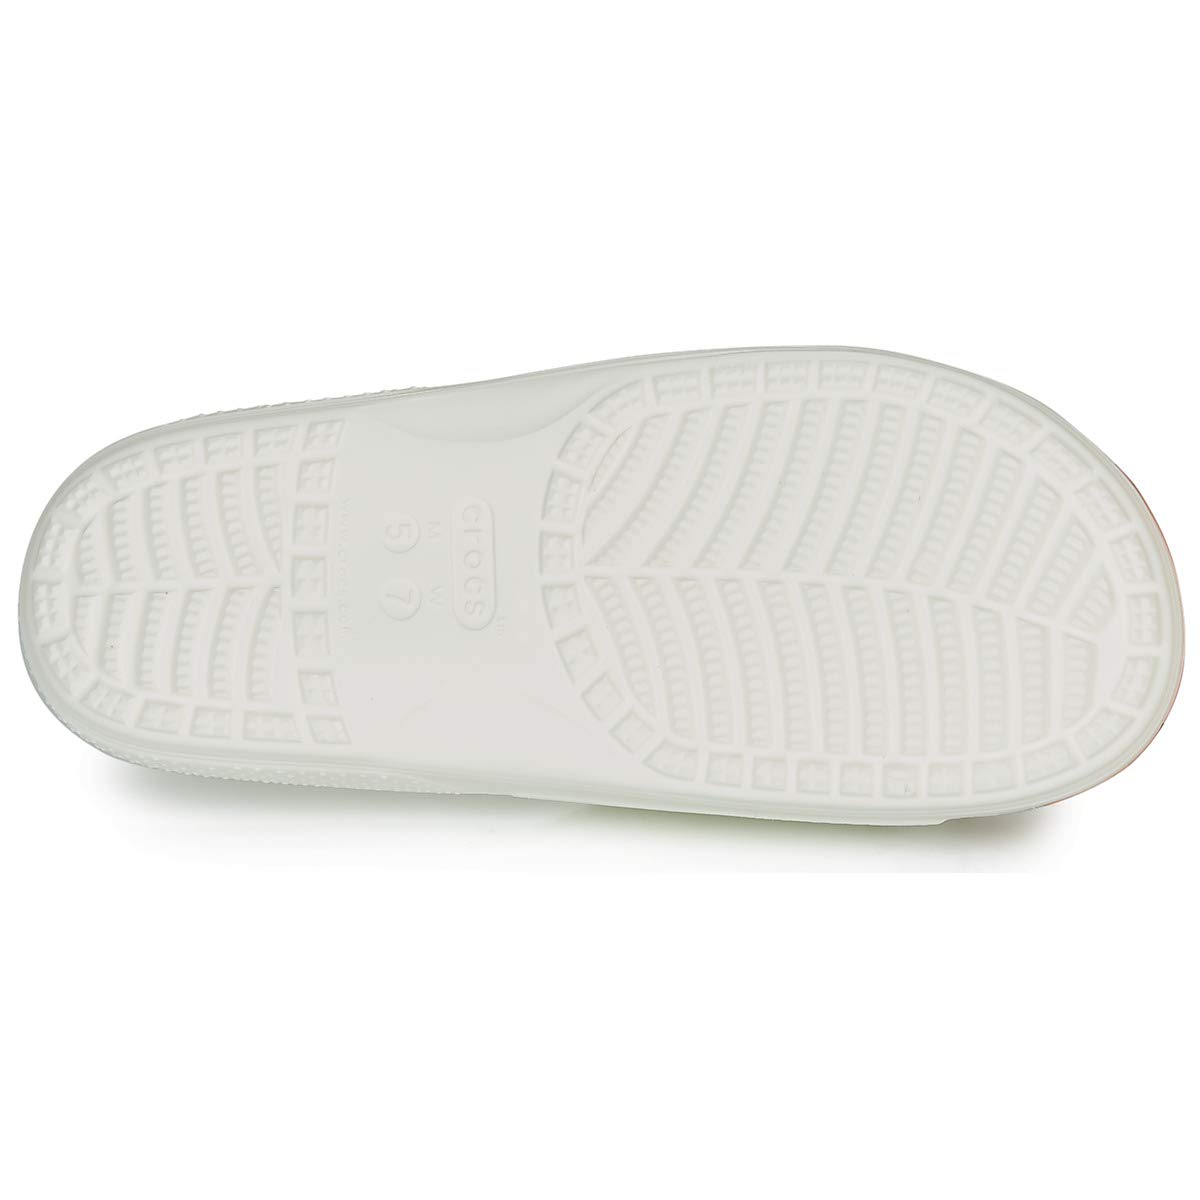 Crocs Unisex Classic Slide Sandals, White, 12 Men/14 Women